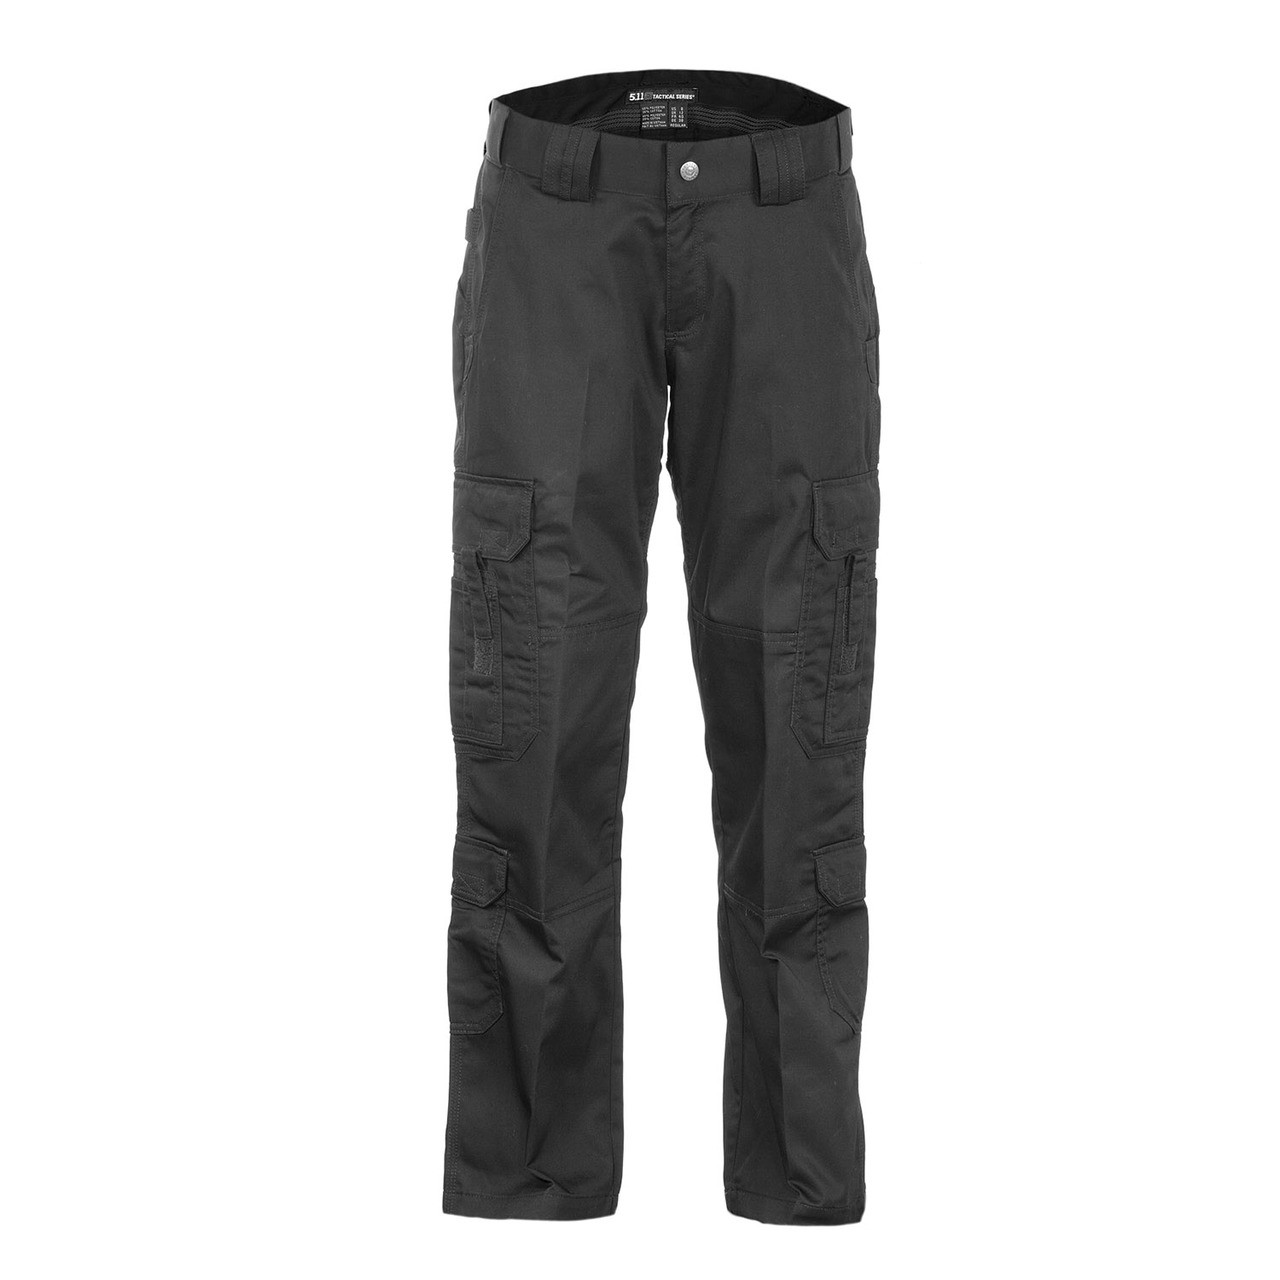 5.11 Tactical Women's Fast-Tac Urban Pants, Water-Resistant Finish, 4-Way  Stretch, Khaki, 2/Long, Style 64420 - Walmart.com